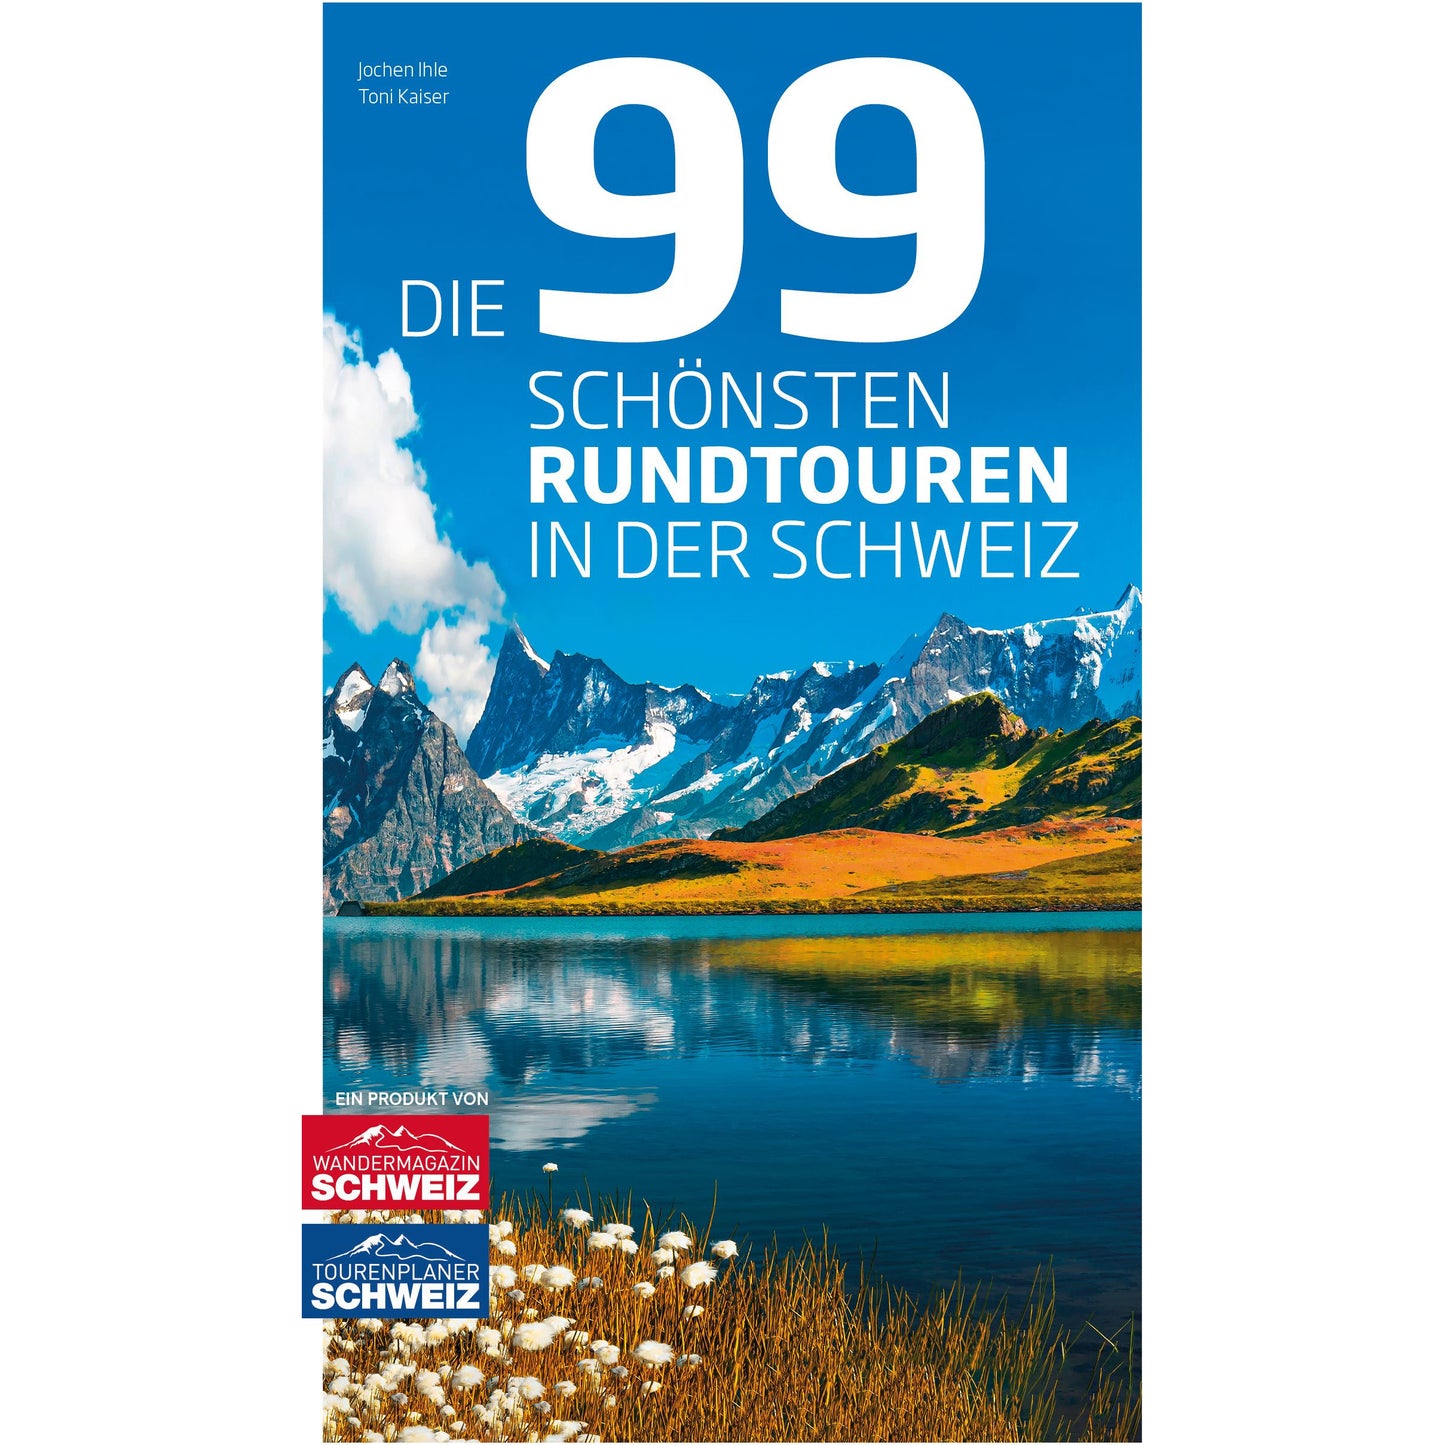 Die 99 schönsten Rundtouren in der Schweiz Wandershop Schweiz 